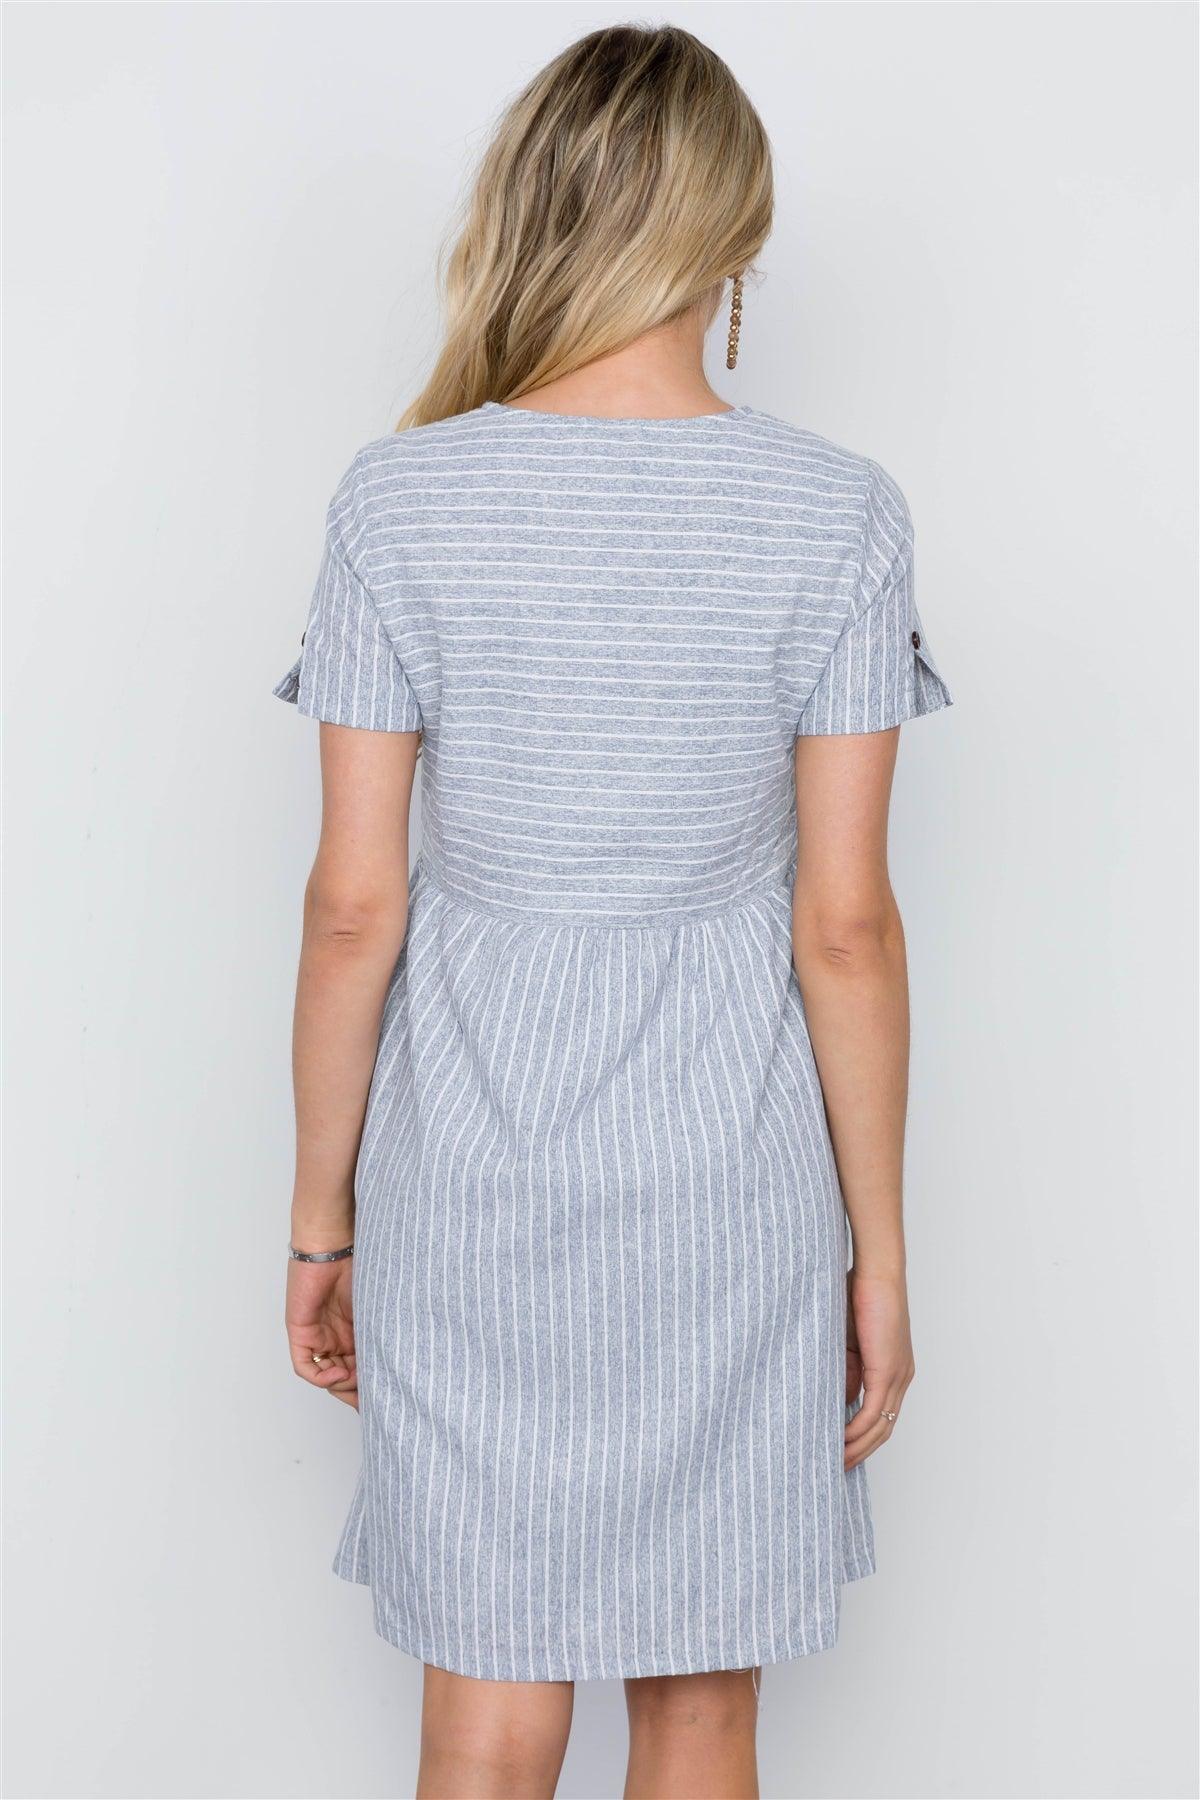 Denim Blue Short Sleeve Round Neck Boho Dress / 2-2-2